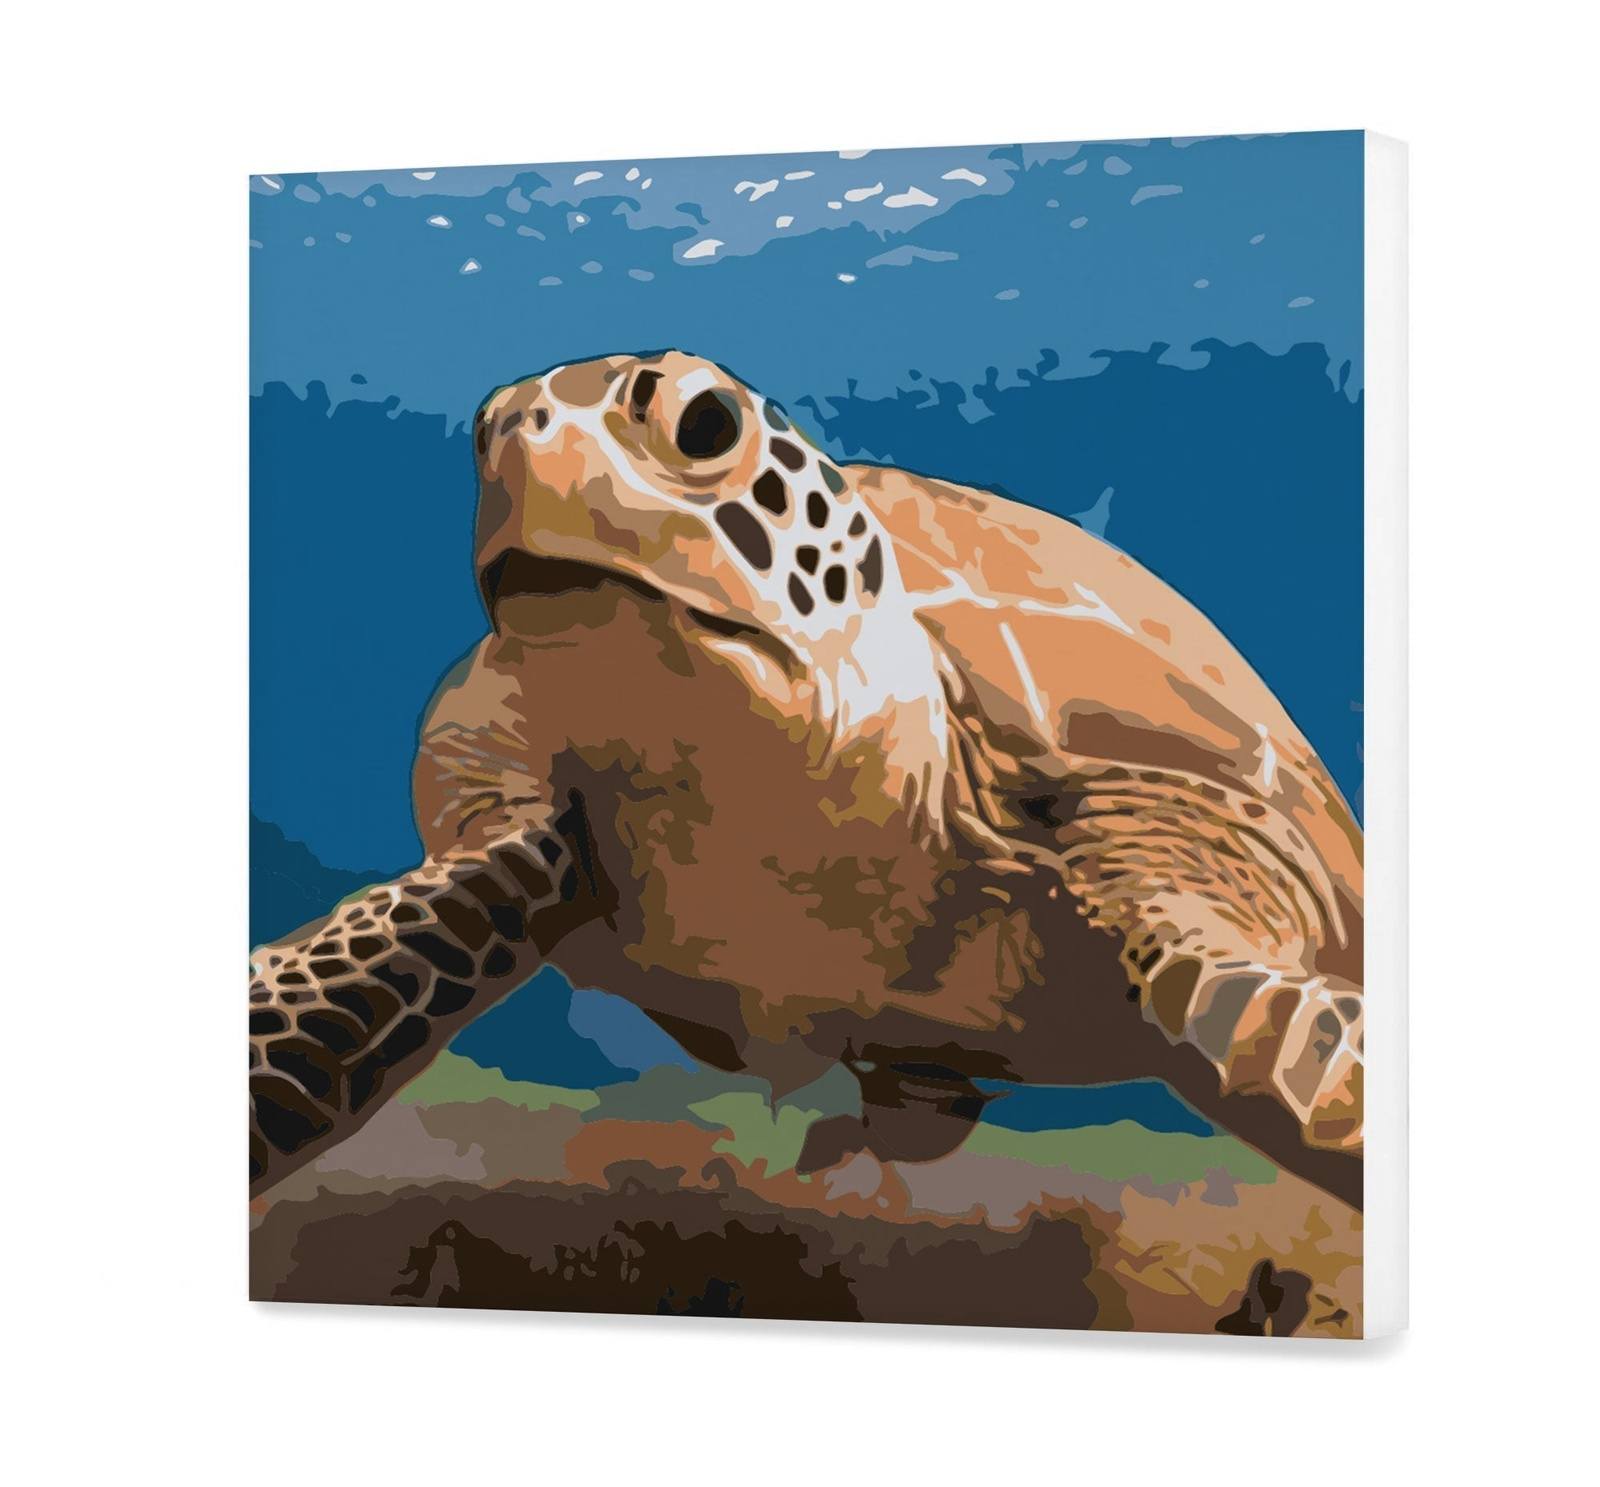 Turtle (Pc0594)